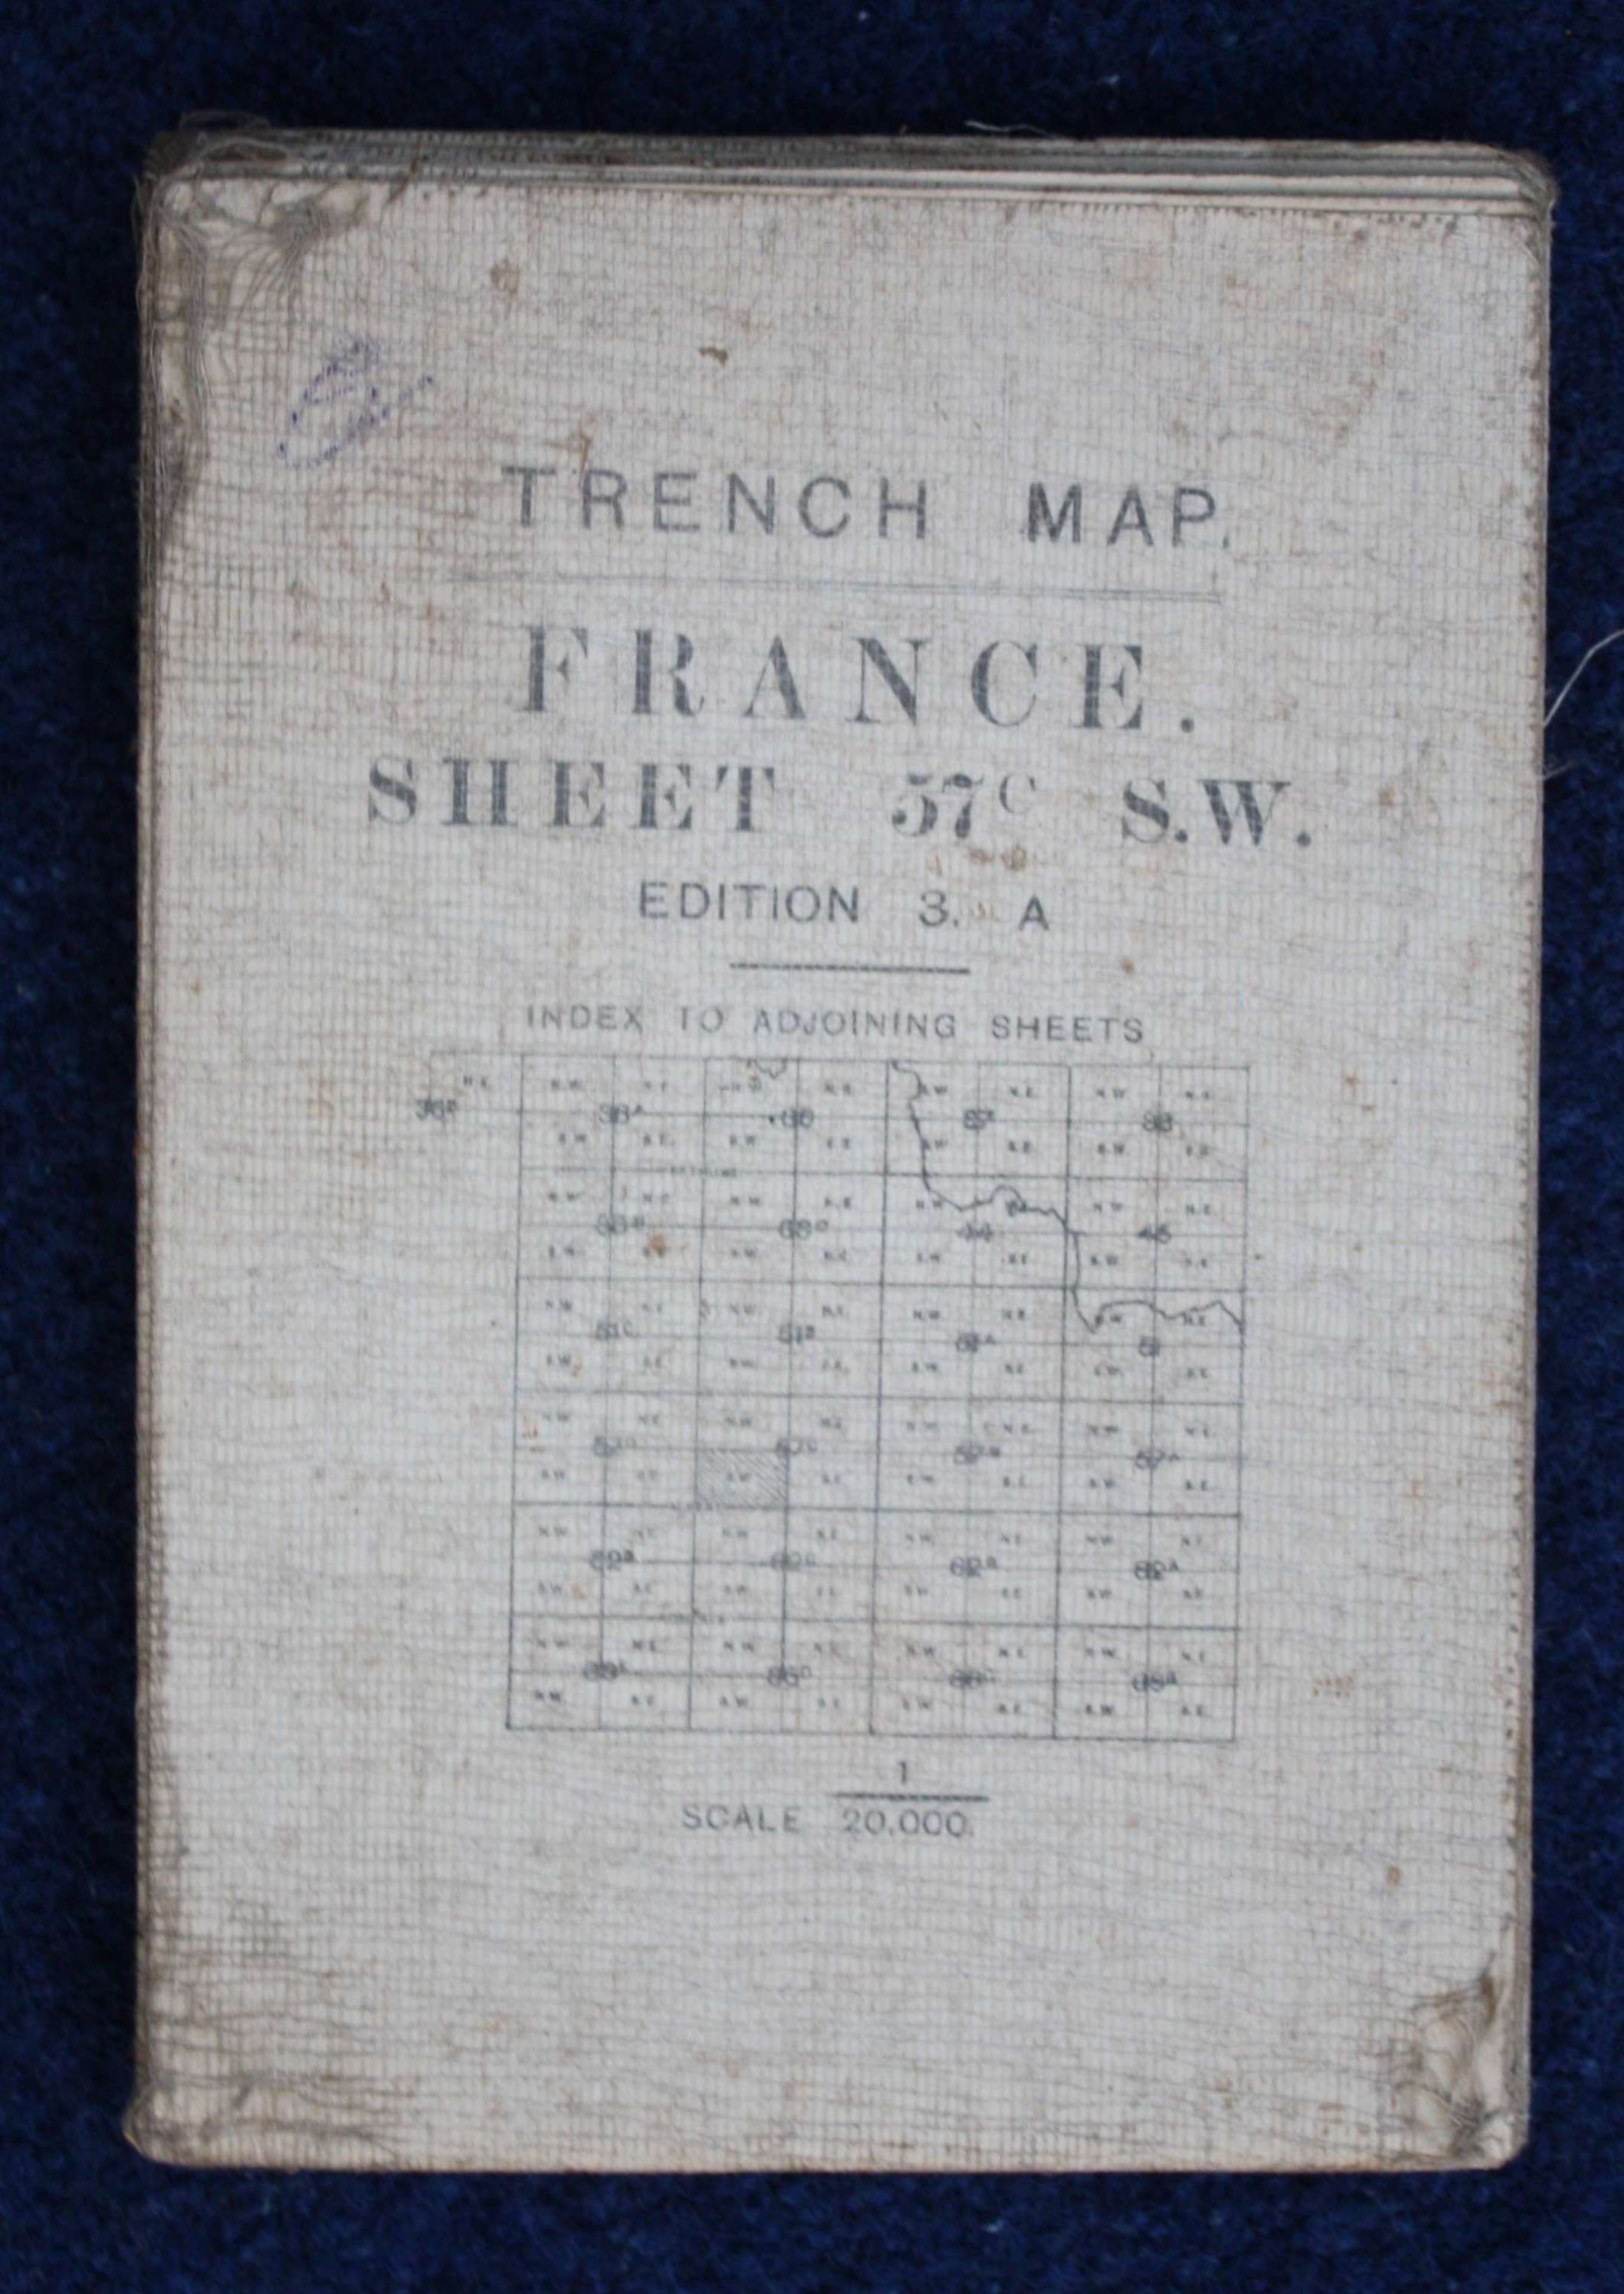 WW1 British Army Trench Map France: 57C SW 1:20,000 FLERS